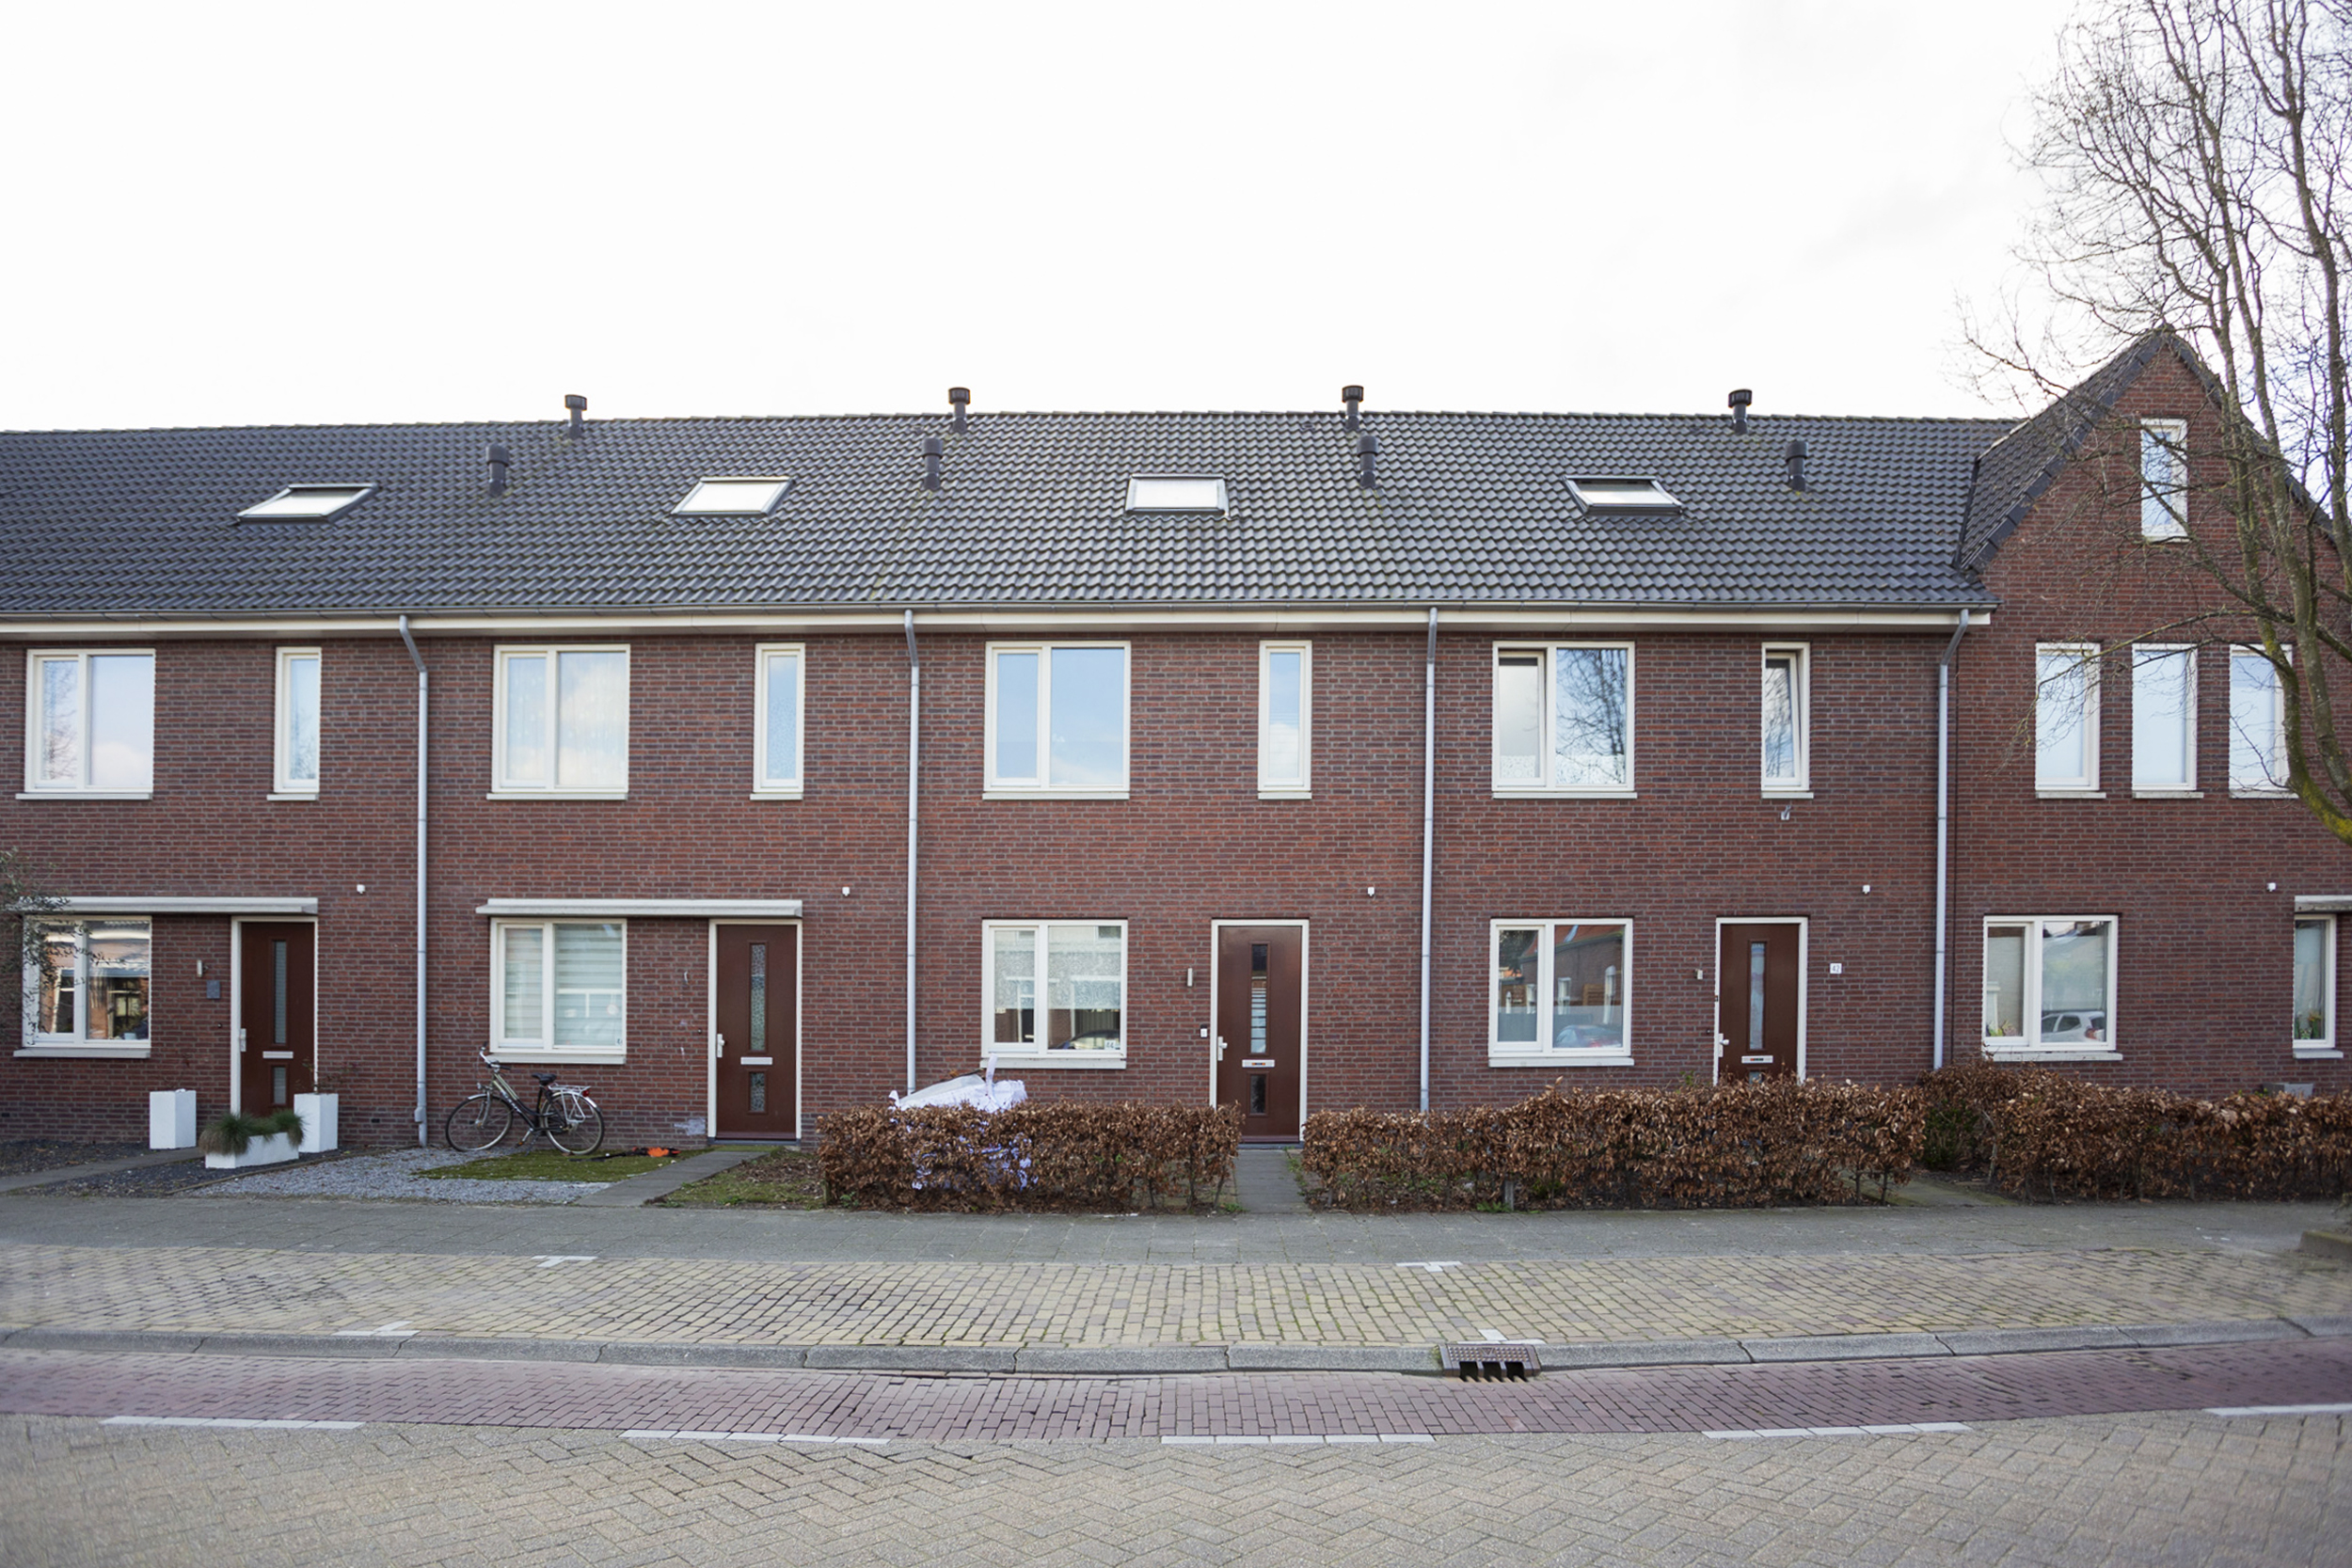 Julianalaan 44, 4941 JD Raamsdonksveer, Nederland